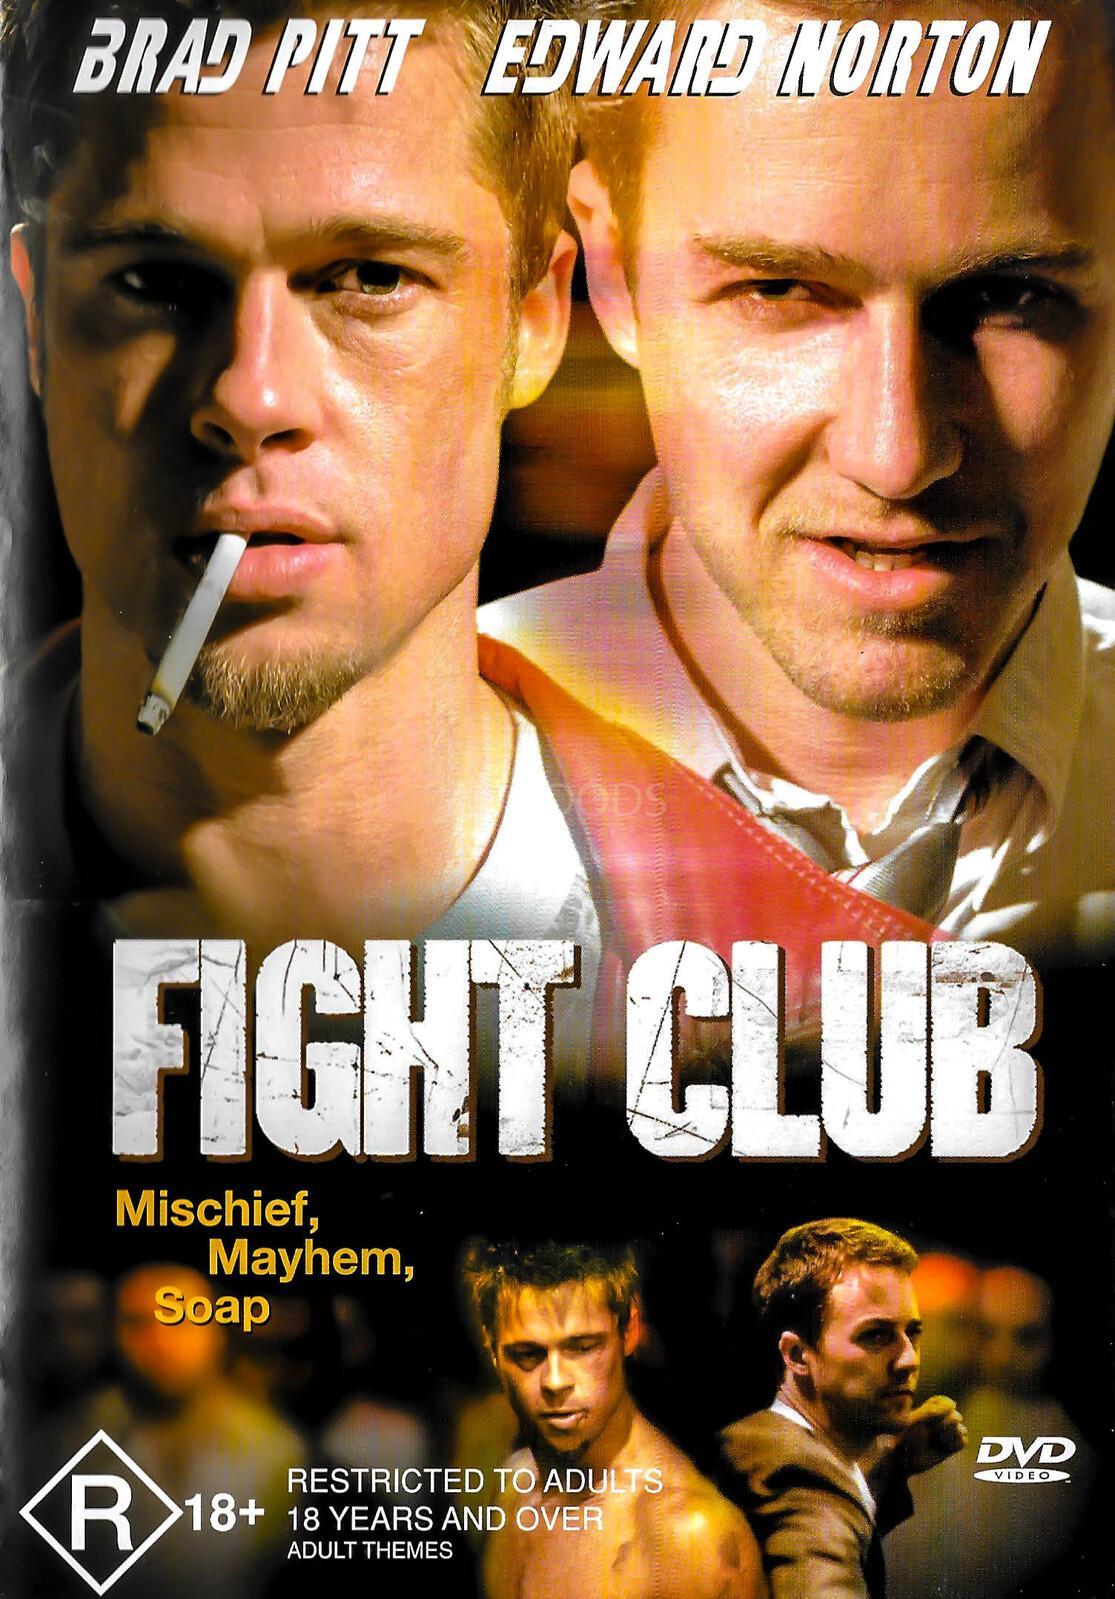 FIGHT CLUB- Brad Pitt Edward Norton DVD Preowned: Disc Excellent